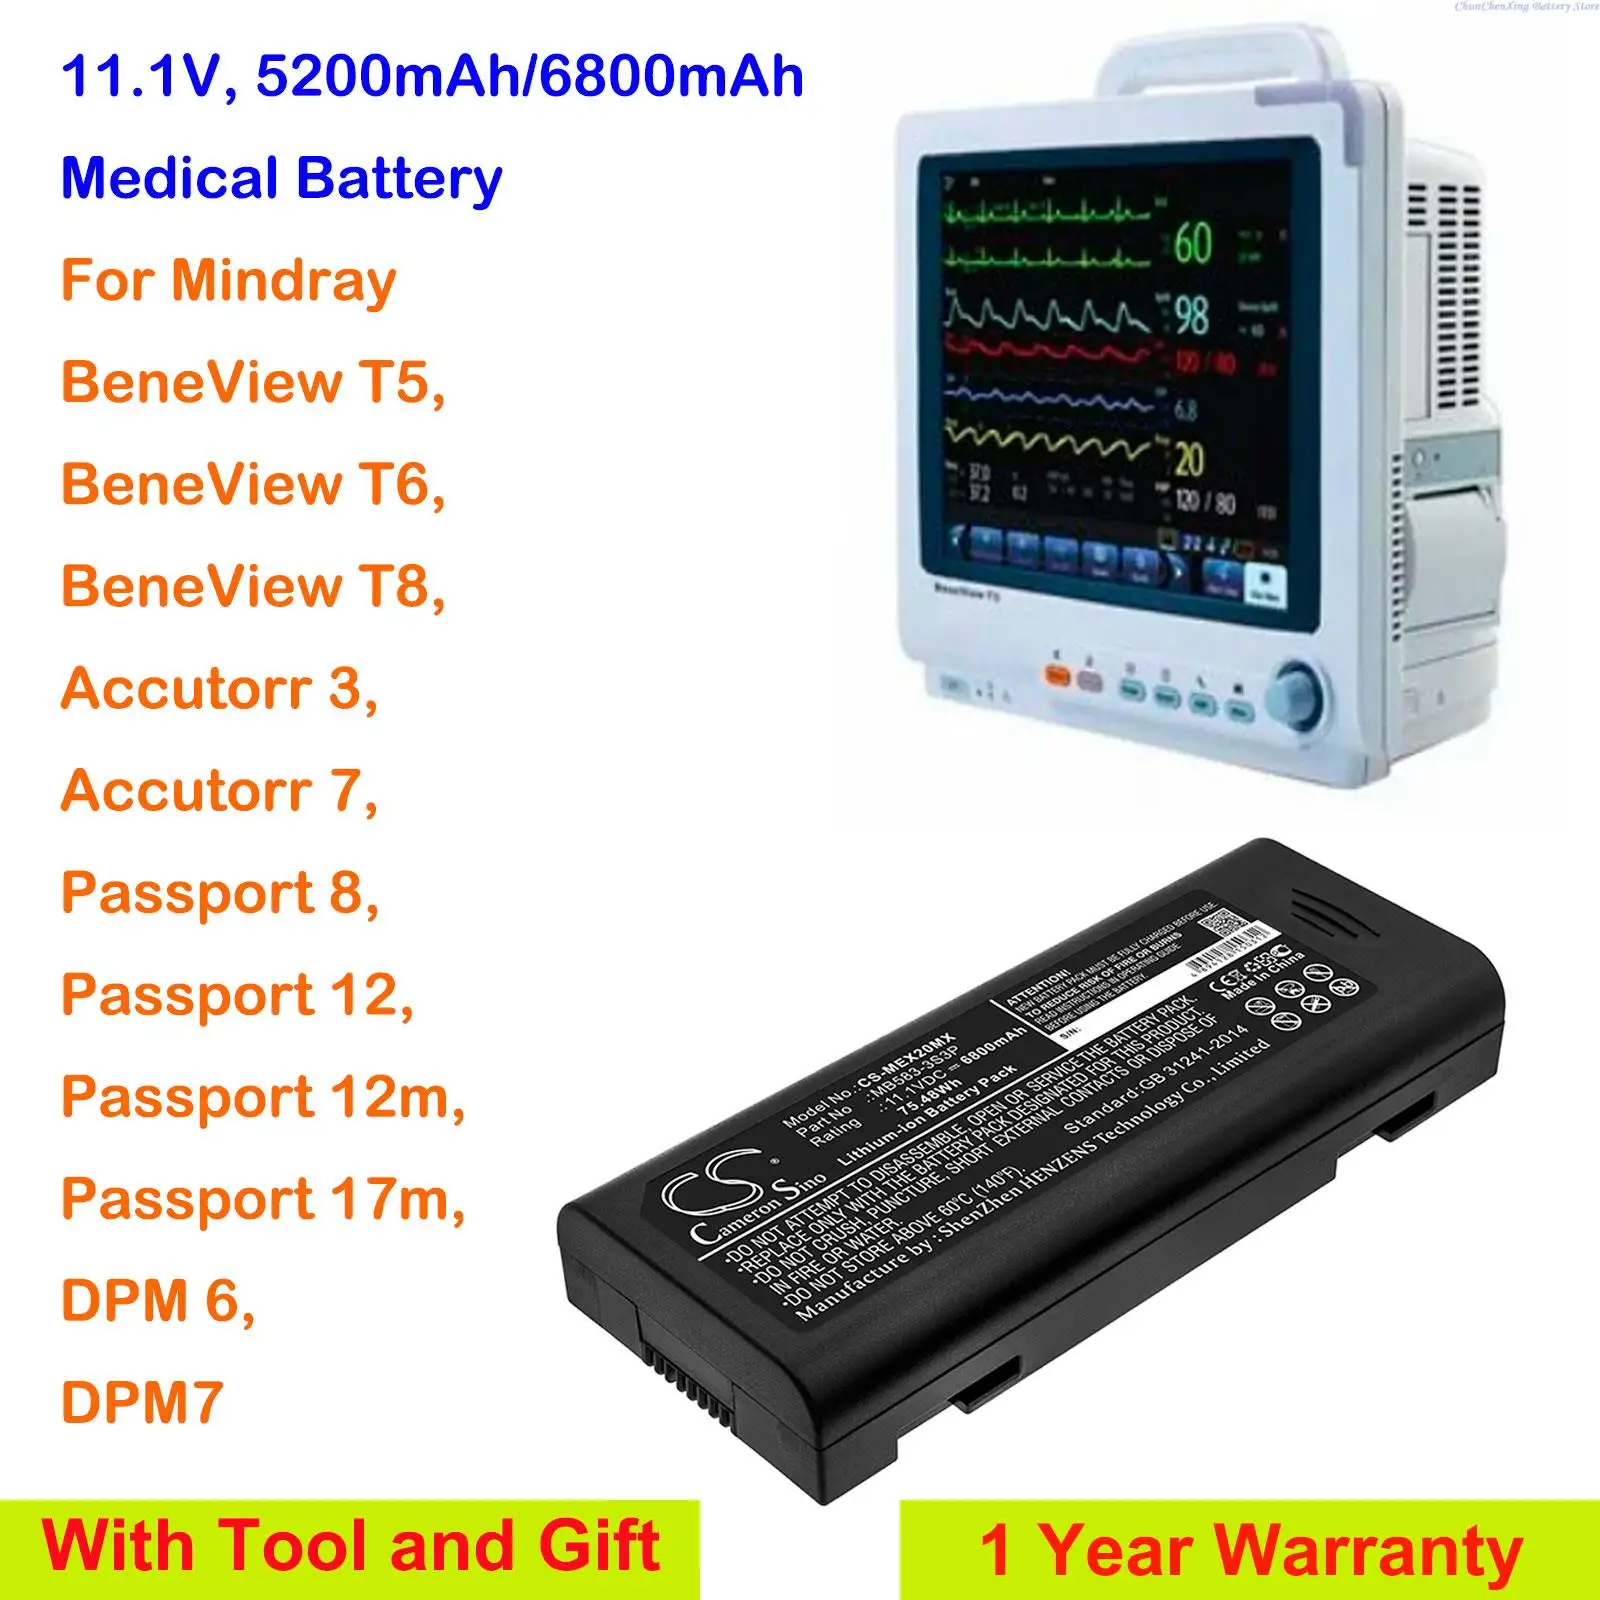 

CS 5200mAh/6800mAh Medical battery for Mindray BeneView T5,T6,T8, Accutorr 3,Accutorr 7,Passport 12,12m,17m,DPM 6,DPM7